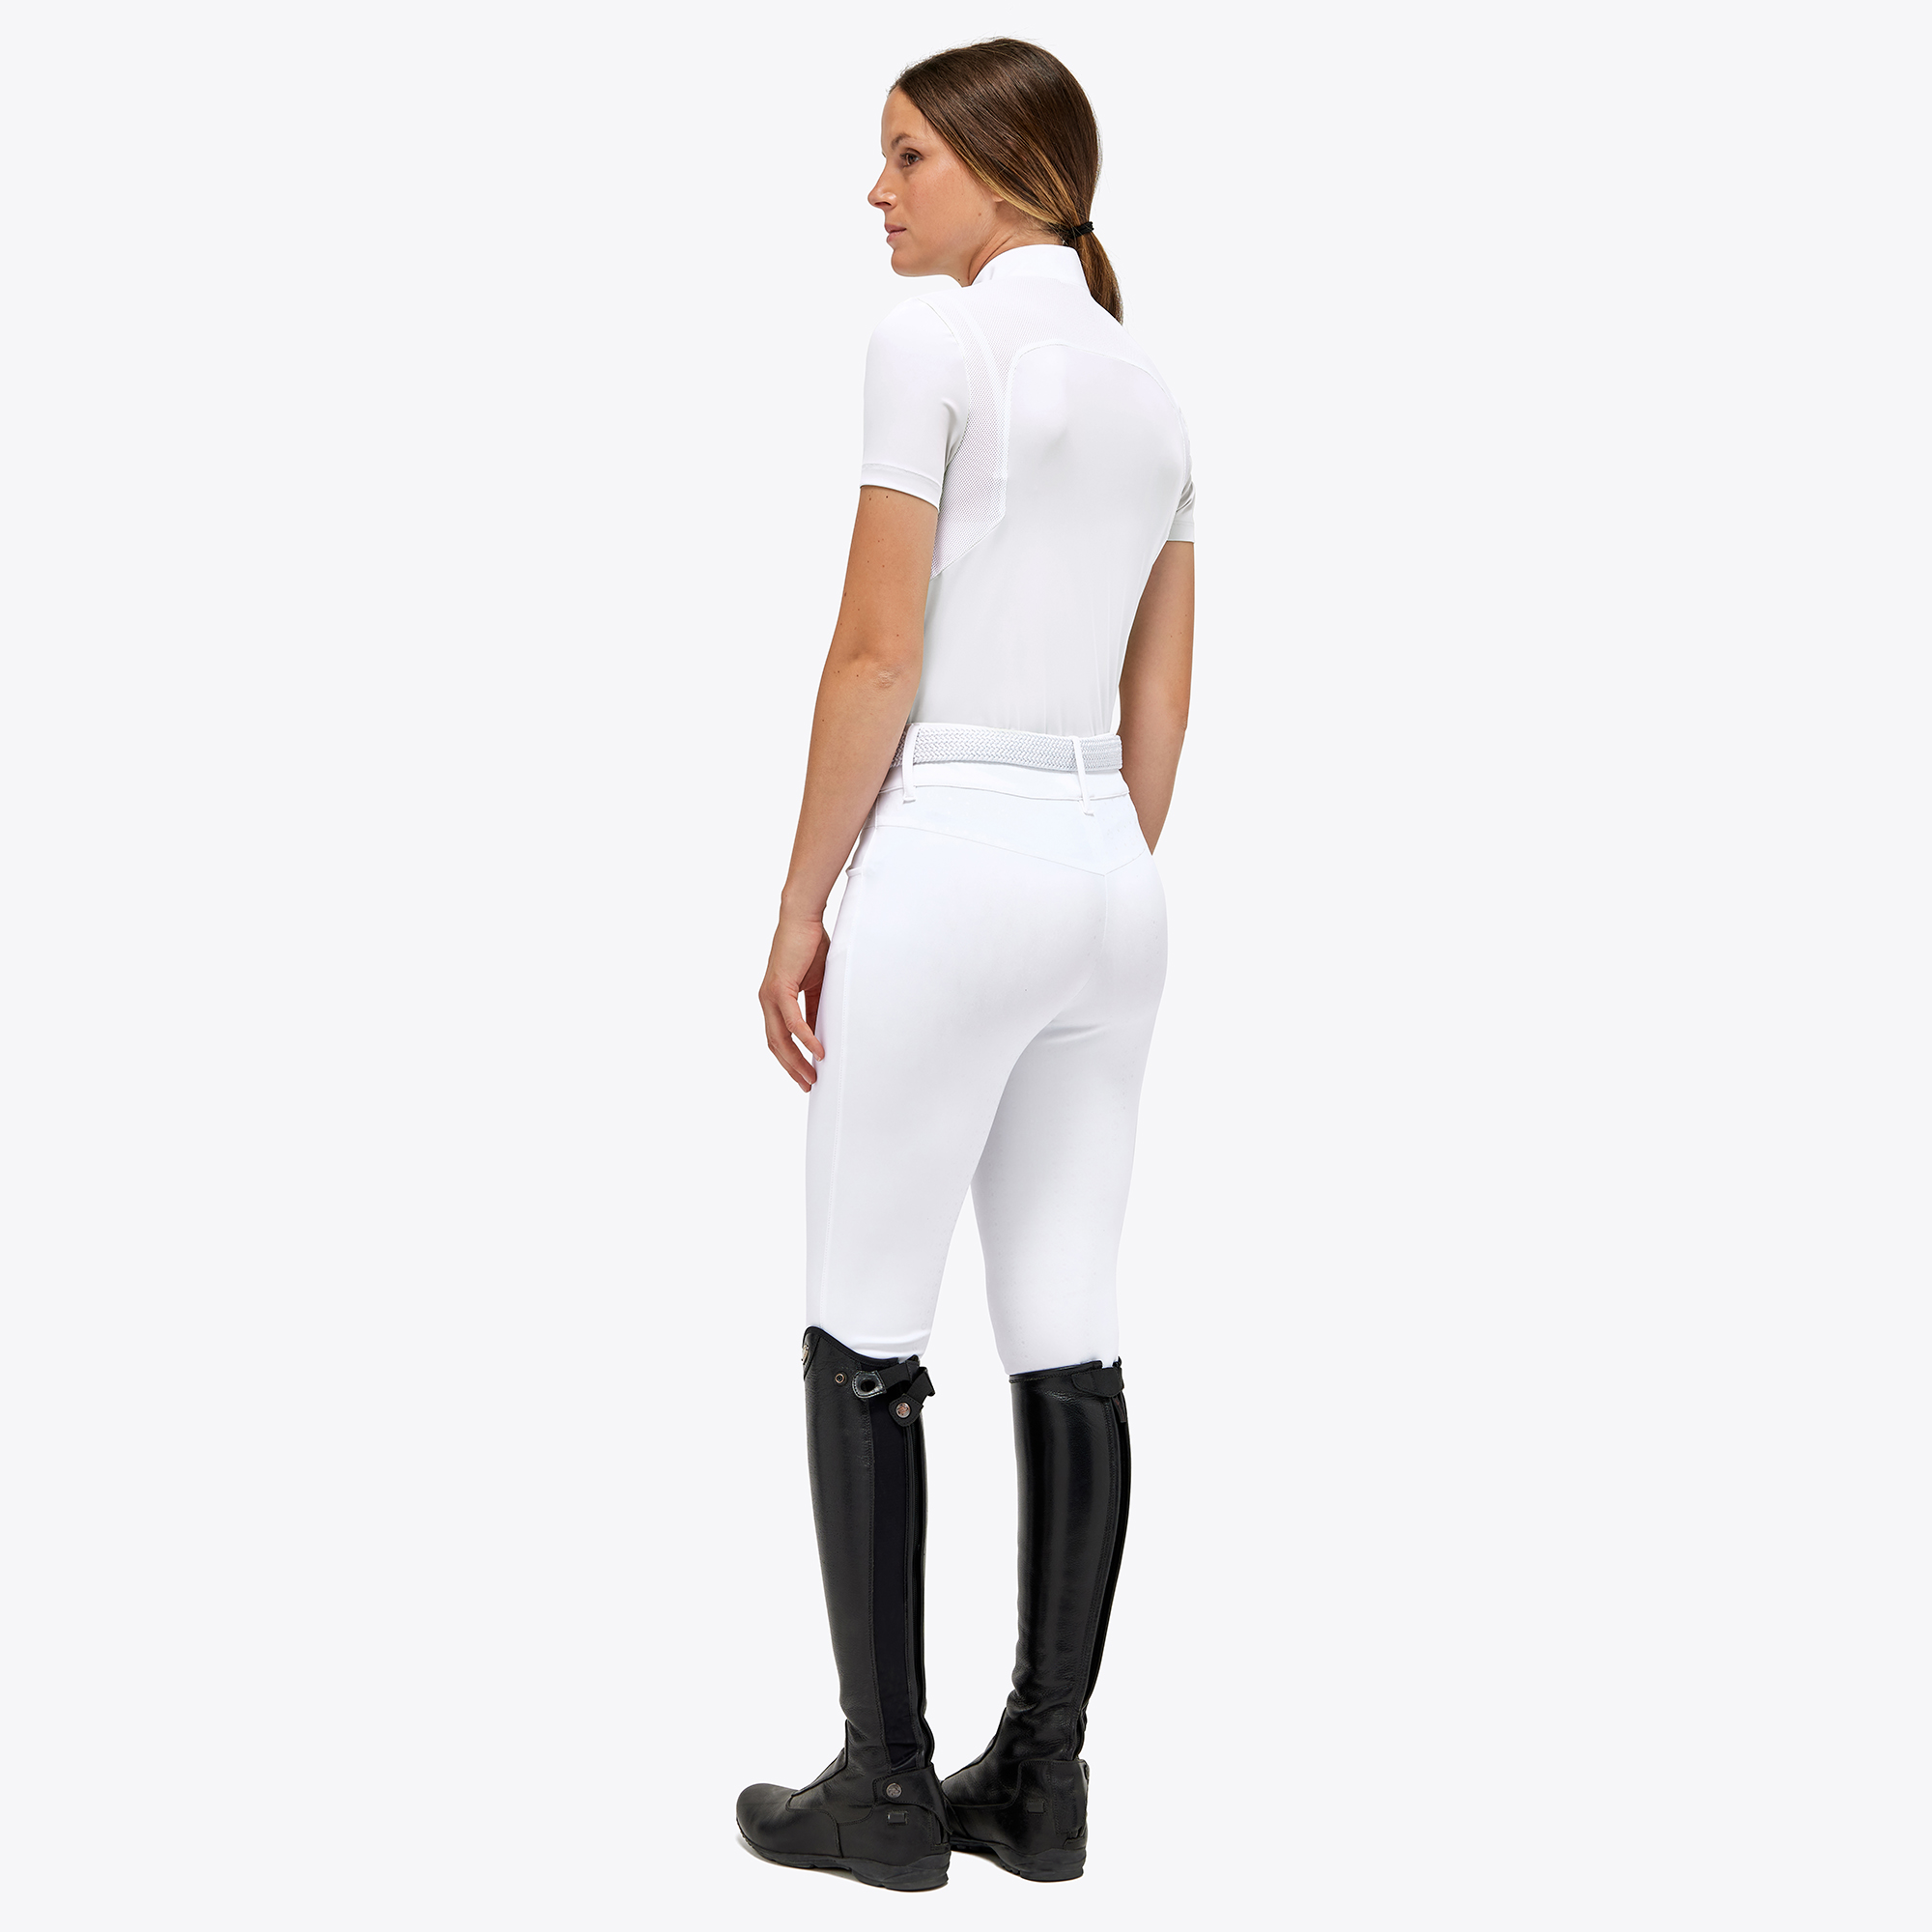 CAVALLERIA TOSCANA elegantes Damen Kurzarm Turniershirt Jersey Mesh - white/knit - XL - 2